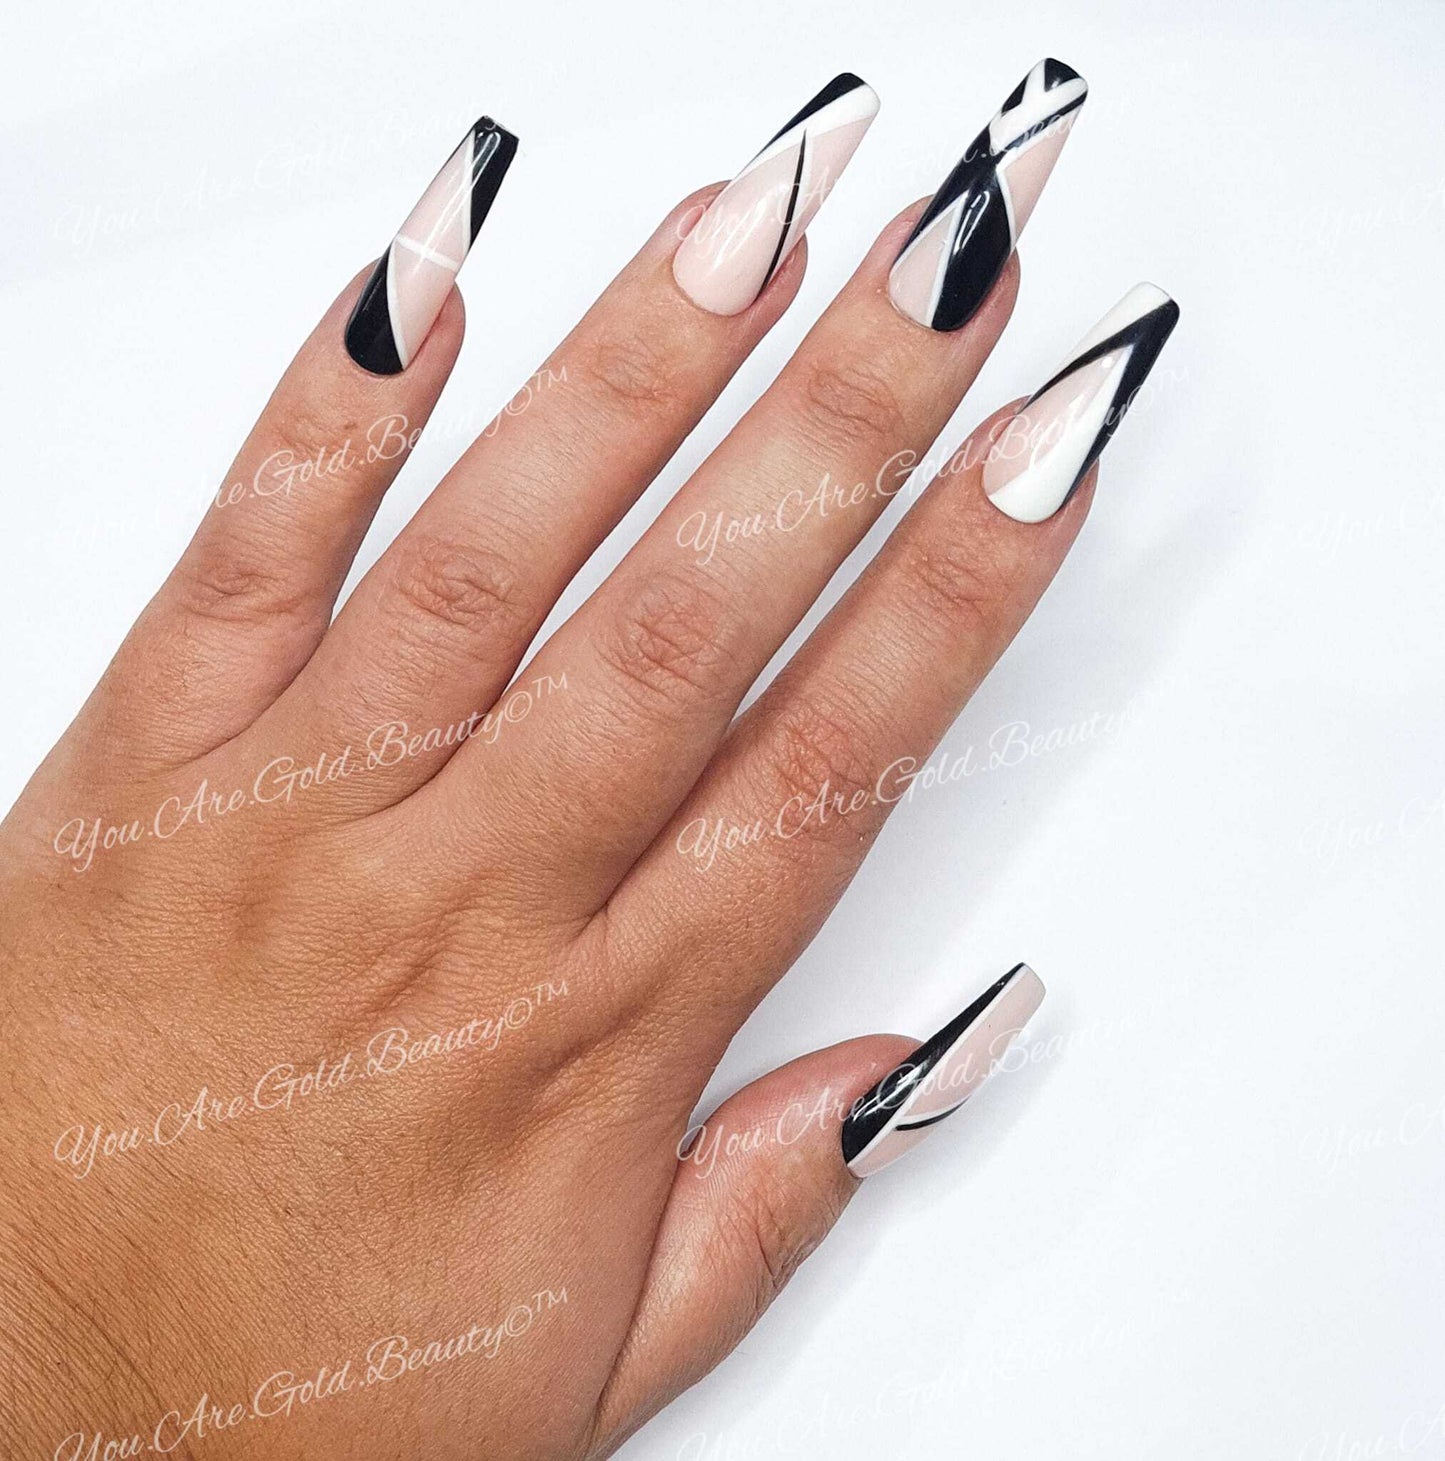 aztec design nails black and white coffin nails press on nails uk